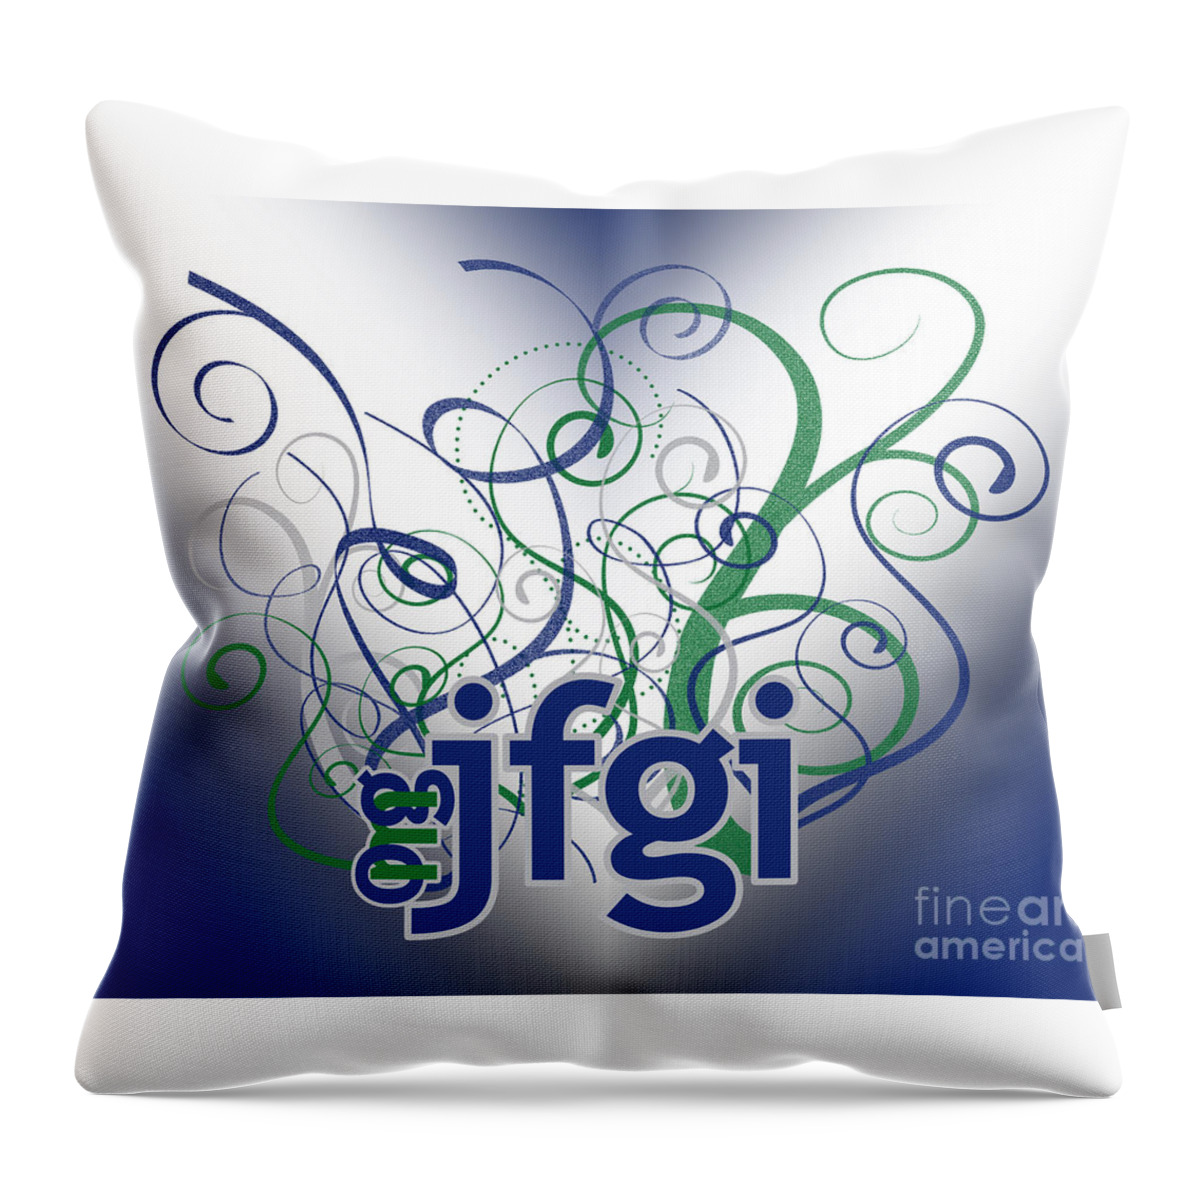 Omg Throw Pillow featuring the digital art OMG jfgi by Linda Seacord